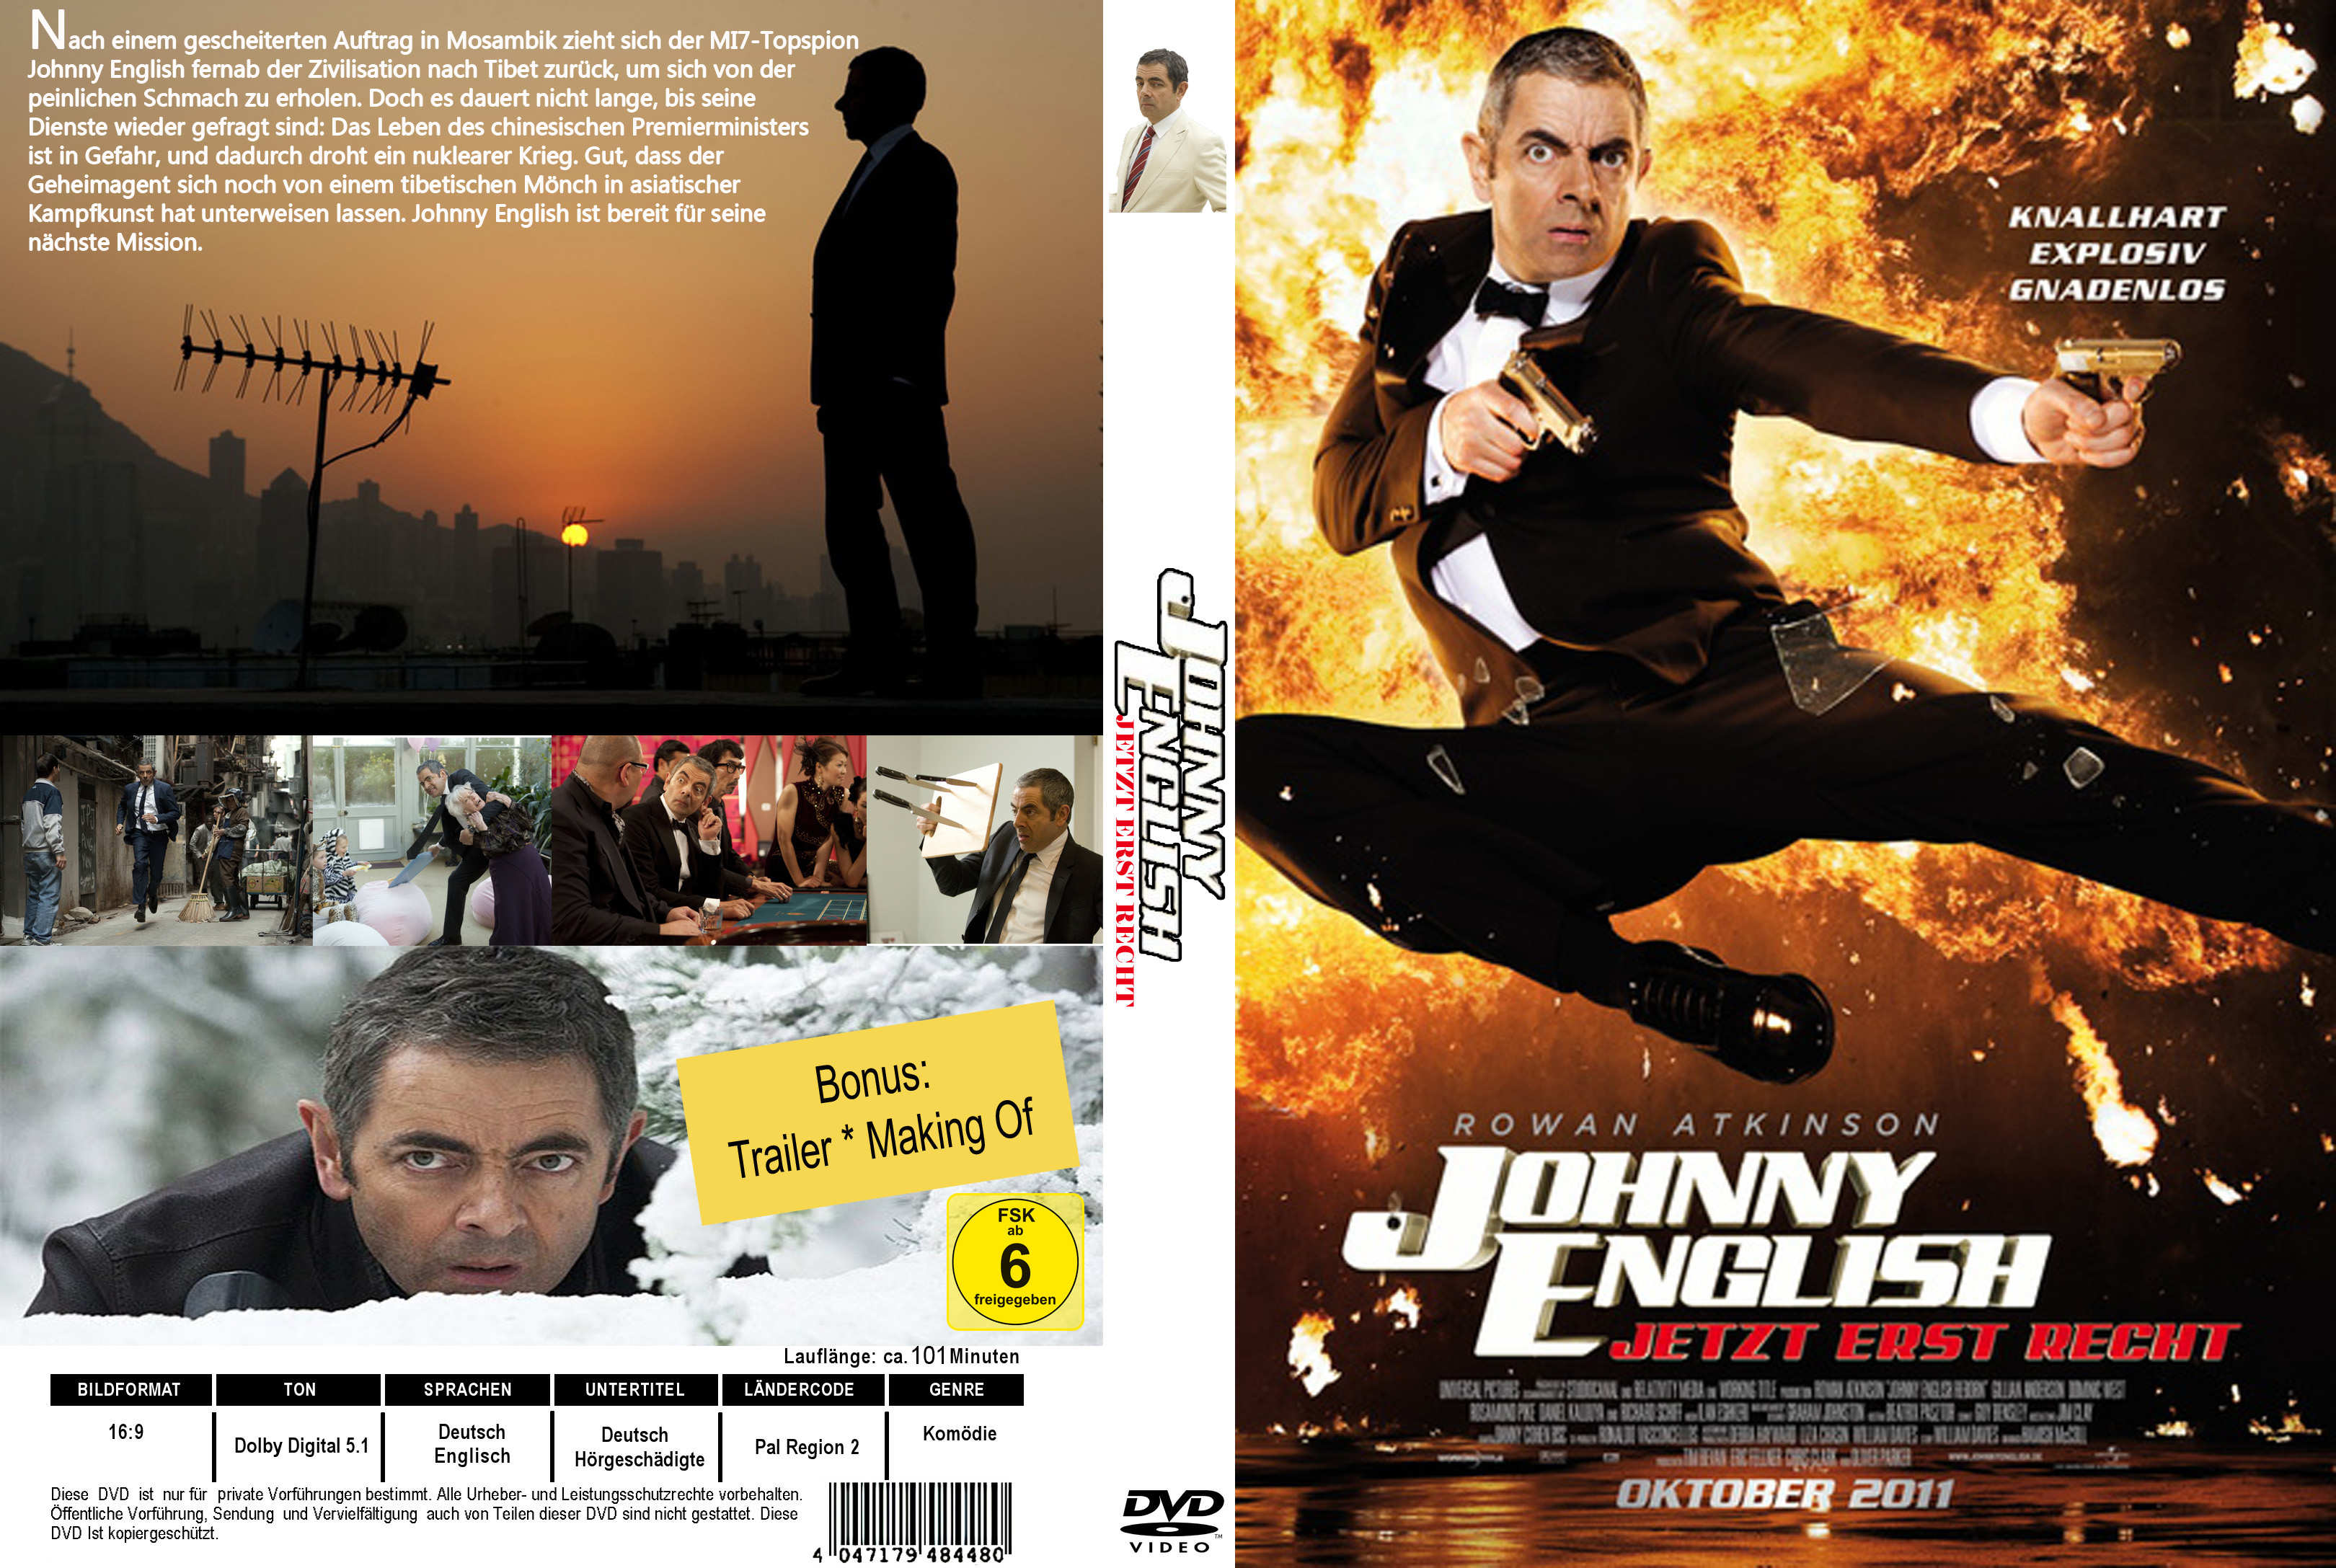 Джонни инглиш отзывы. Johnny English 2. Johnny English афиша. Агент Джонни Инглиш Blu ray Cover. Агент Джонни Инглиш. (2003) Blu ray Cover.